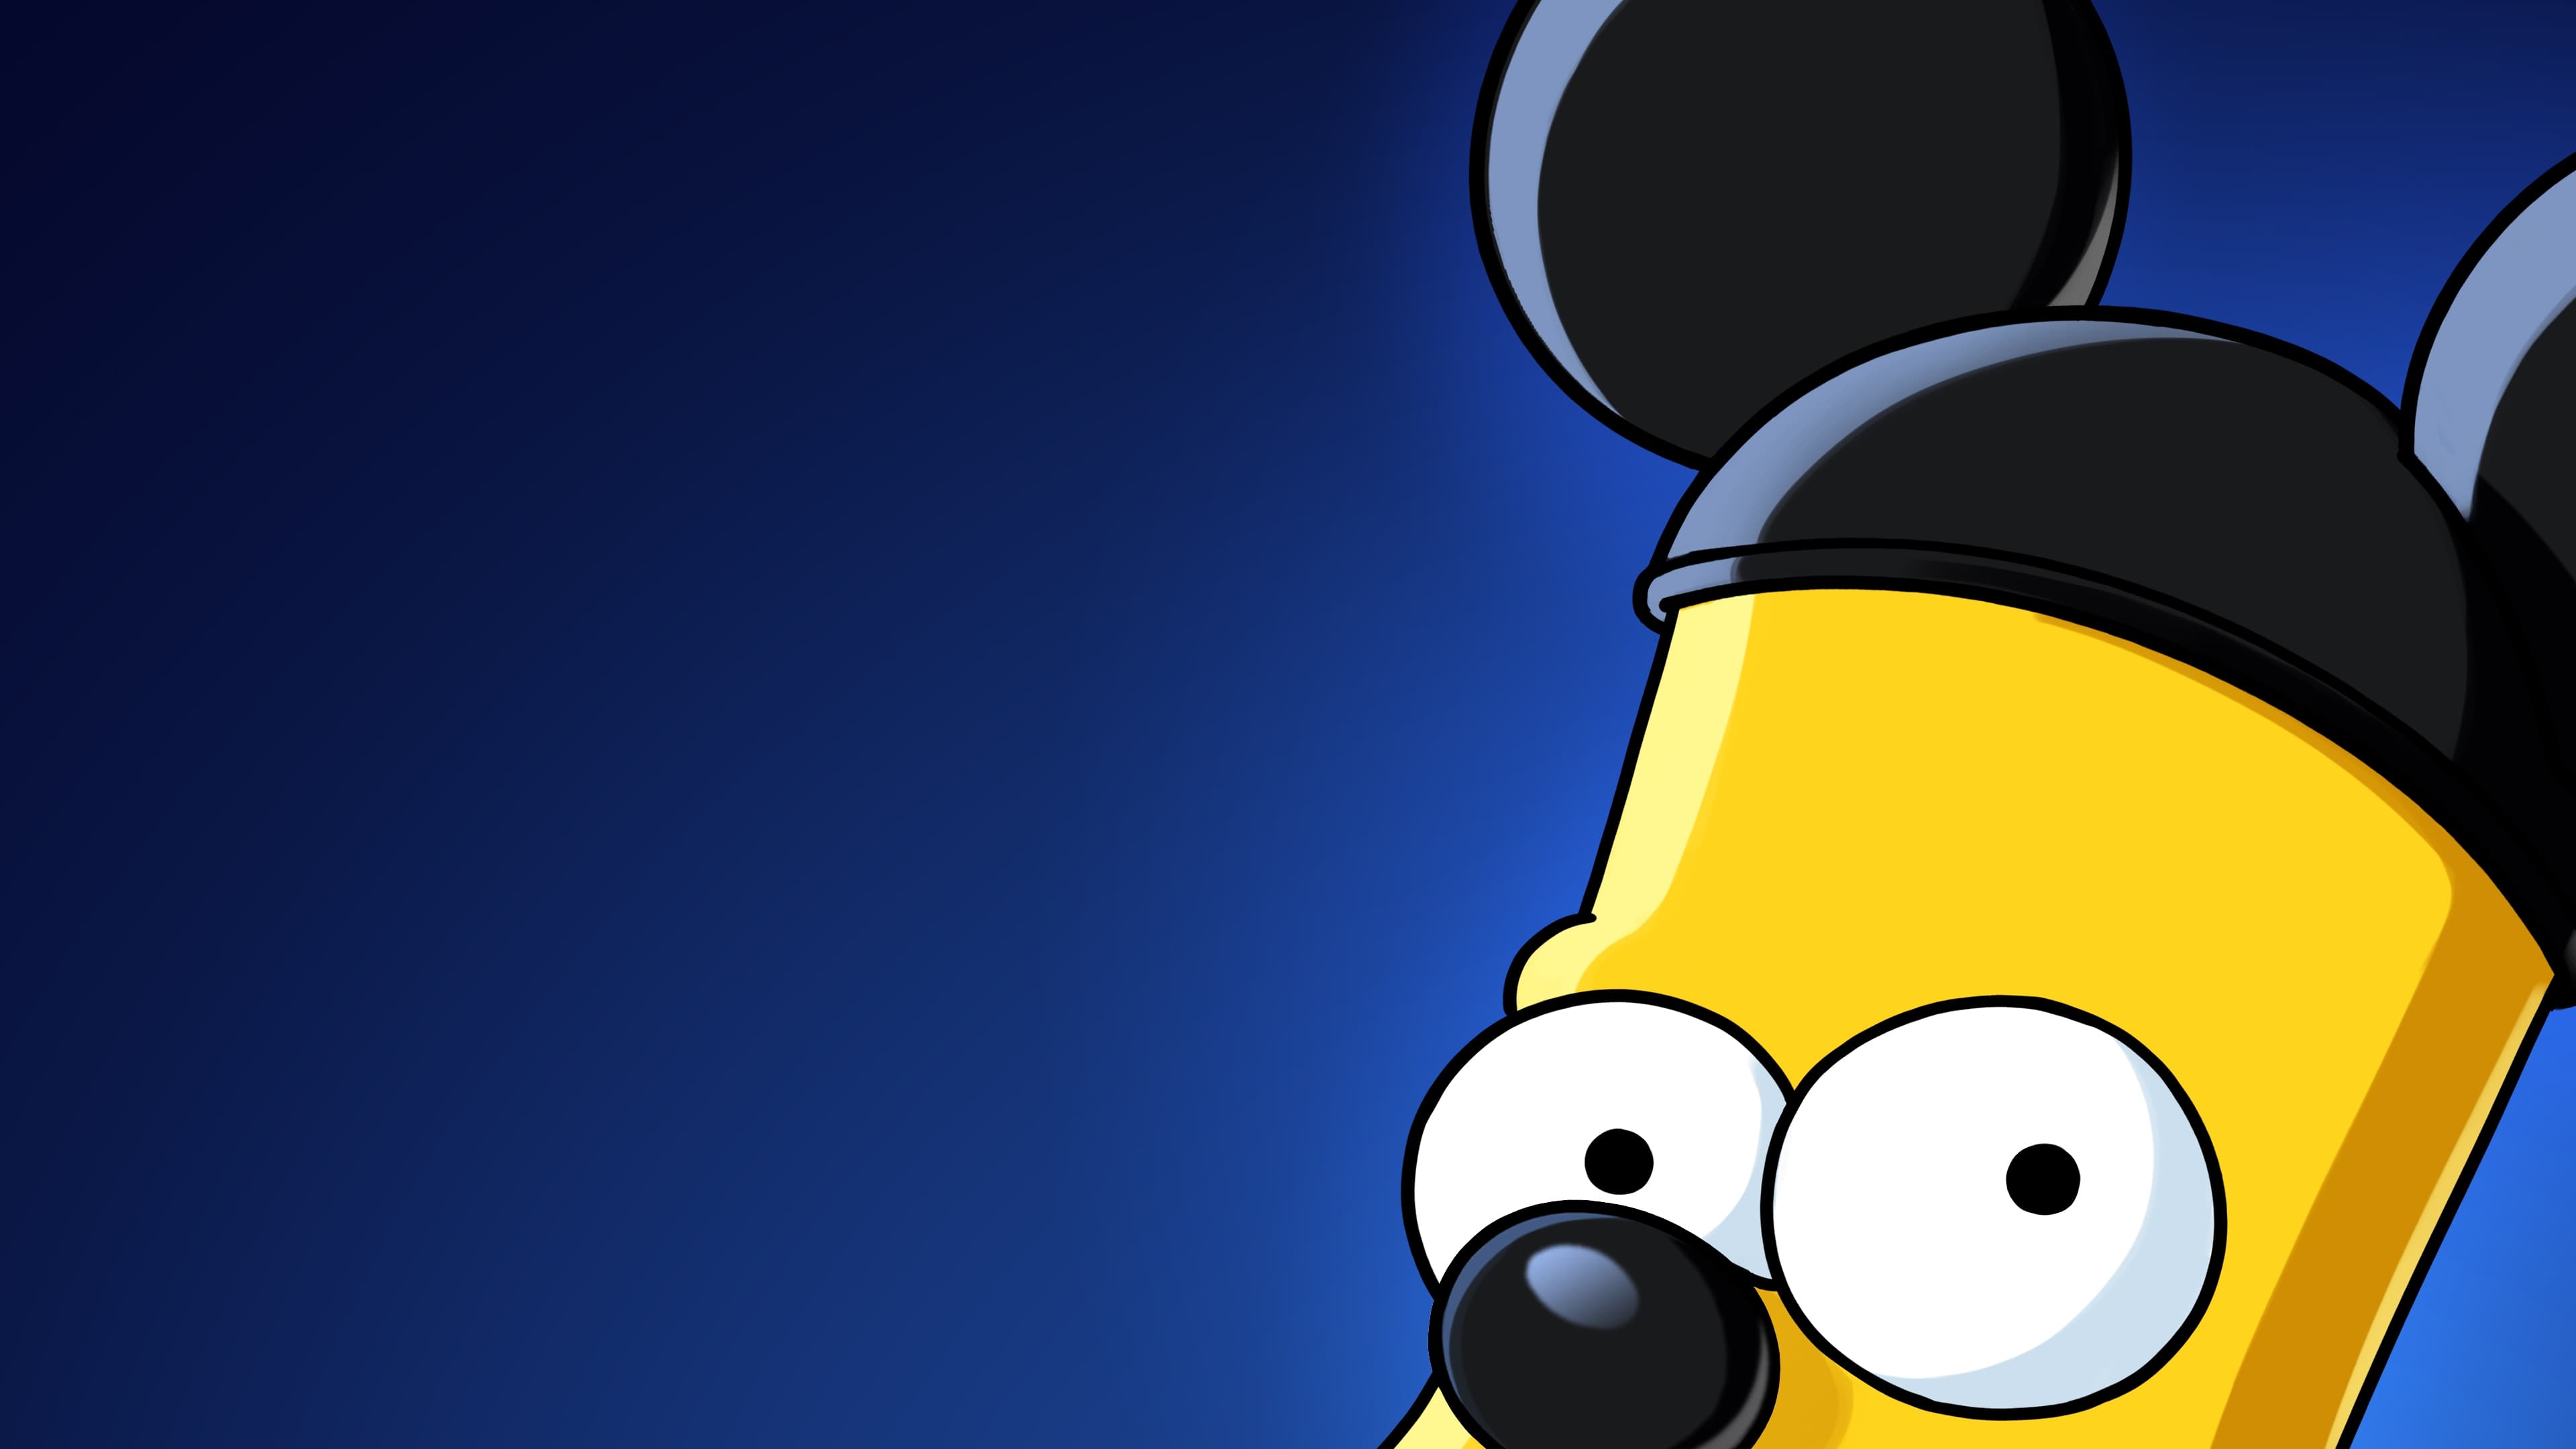 The Simpsons in Plusaversary 2021 123movies